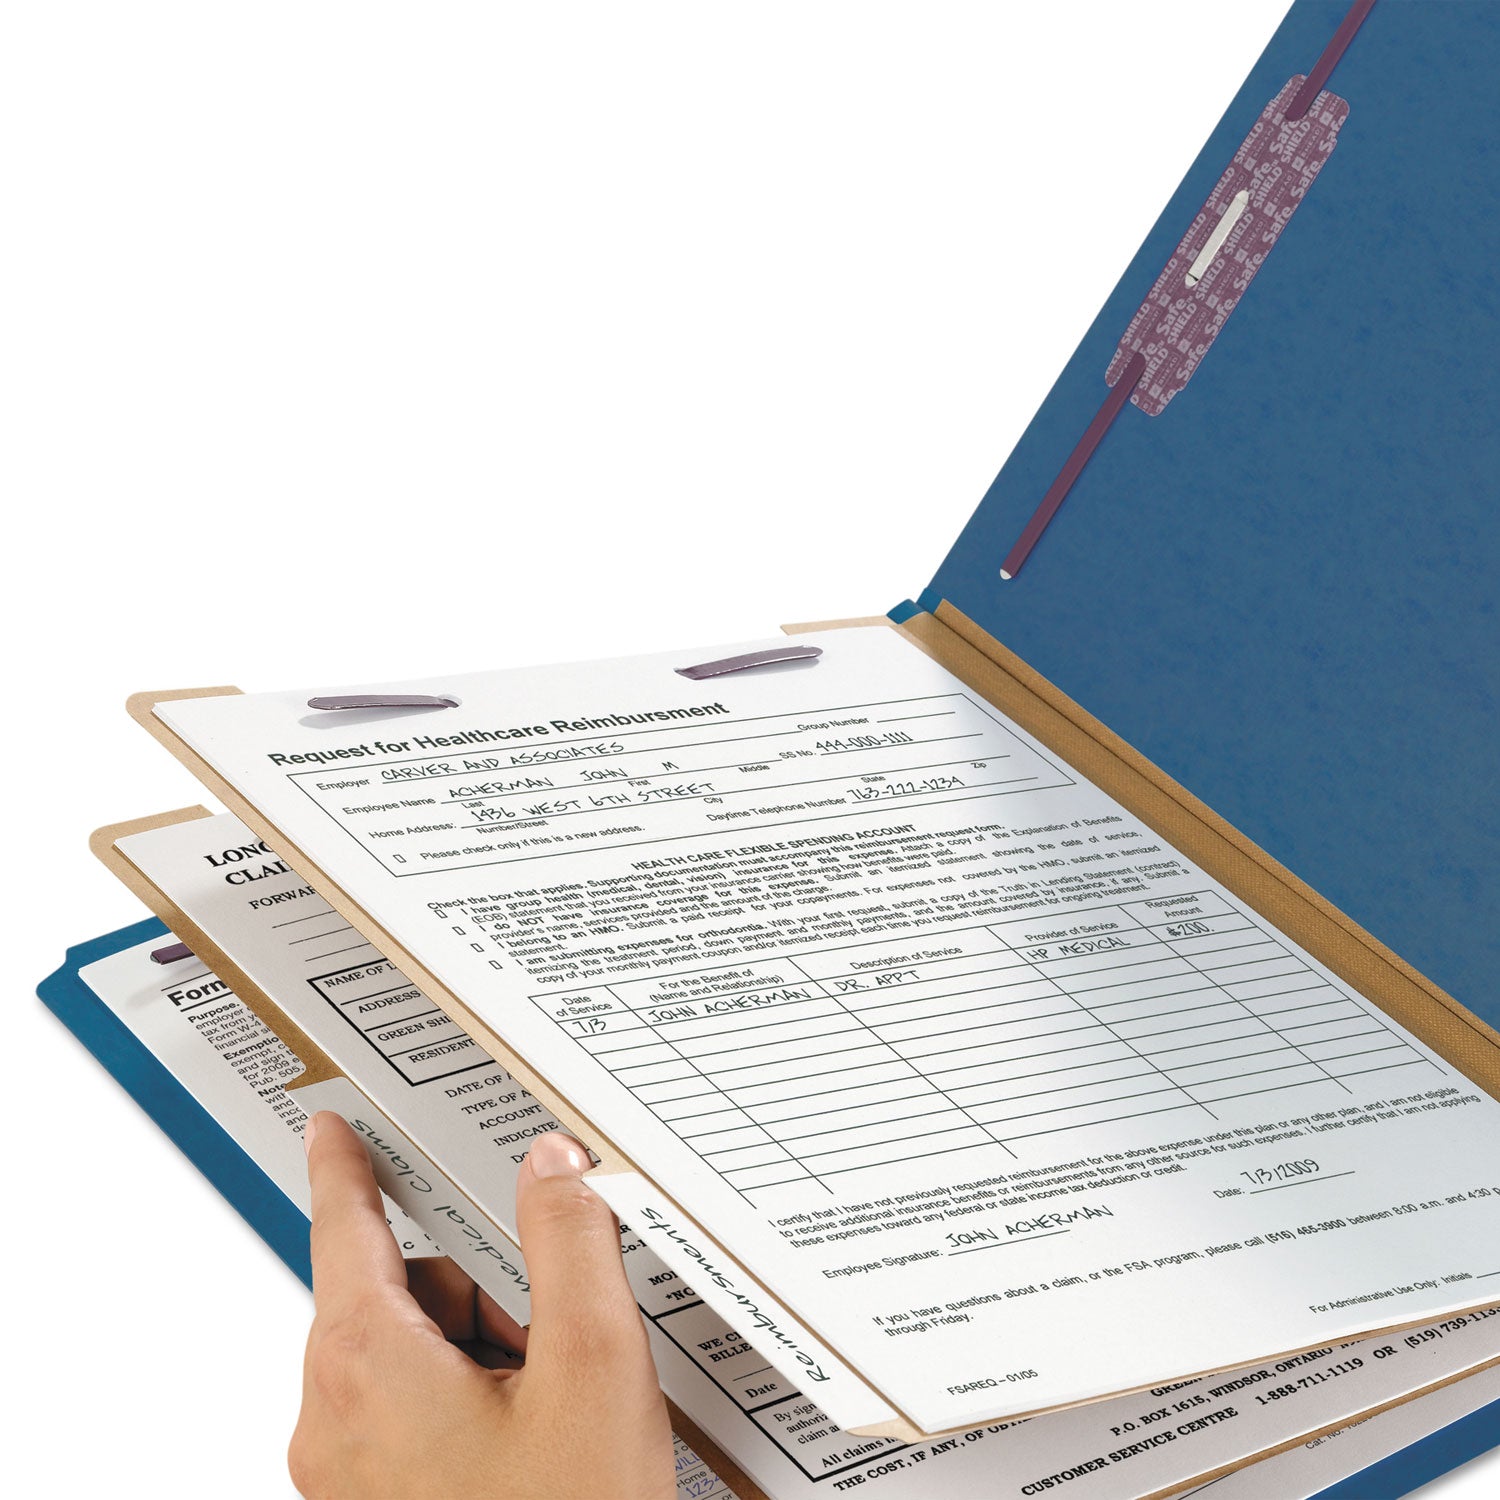 Six-Section Pressboard Top Tab Classification Folders, Six SafeSHIELD Fasteners, 2 Dividers, Letter Size, Dark Blue, 10/Box - 